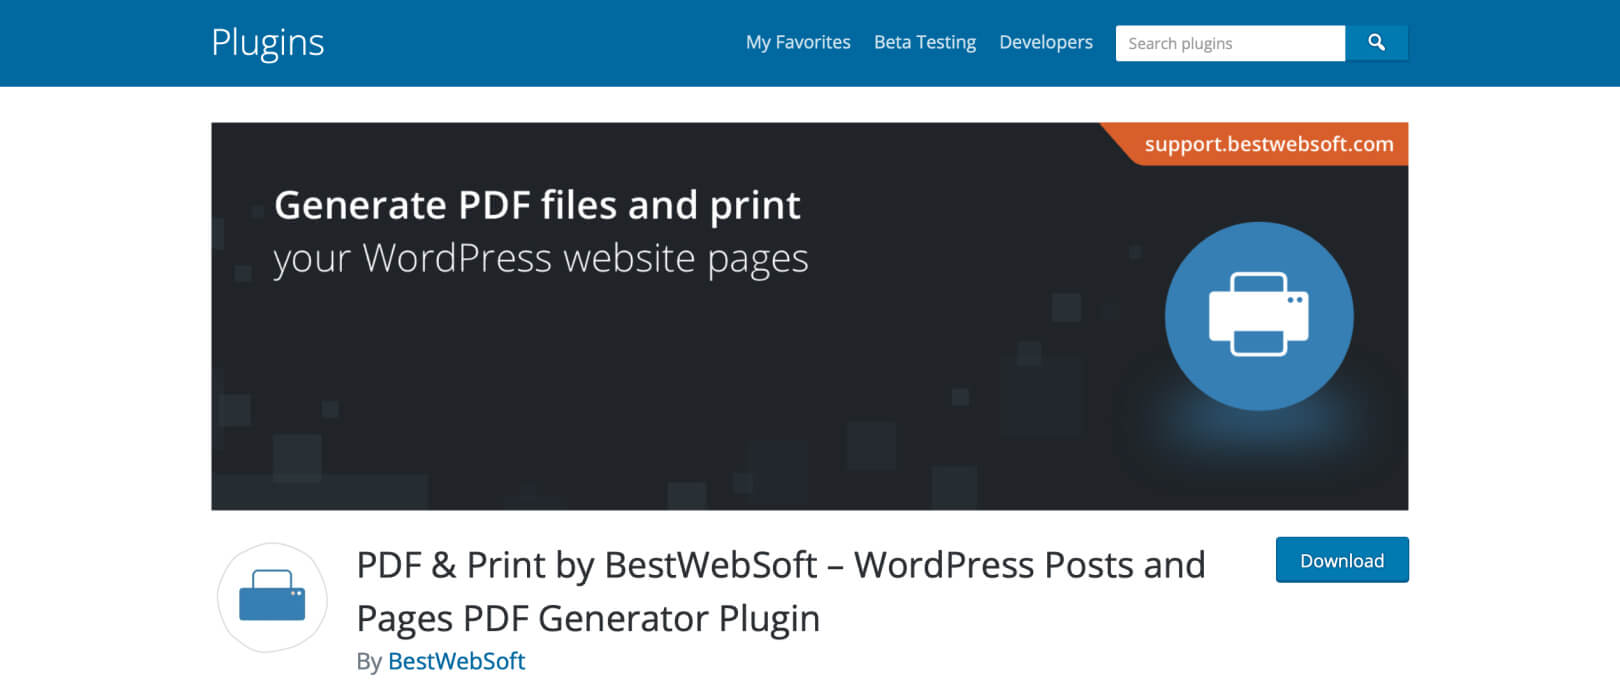 PDF and Print